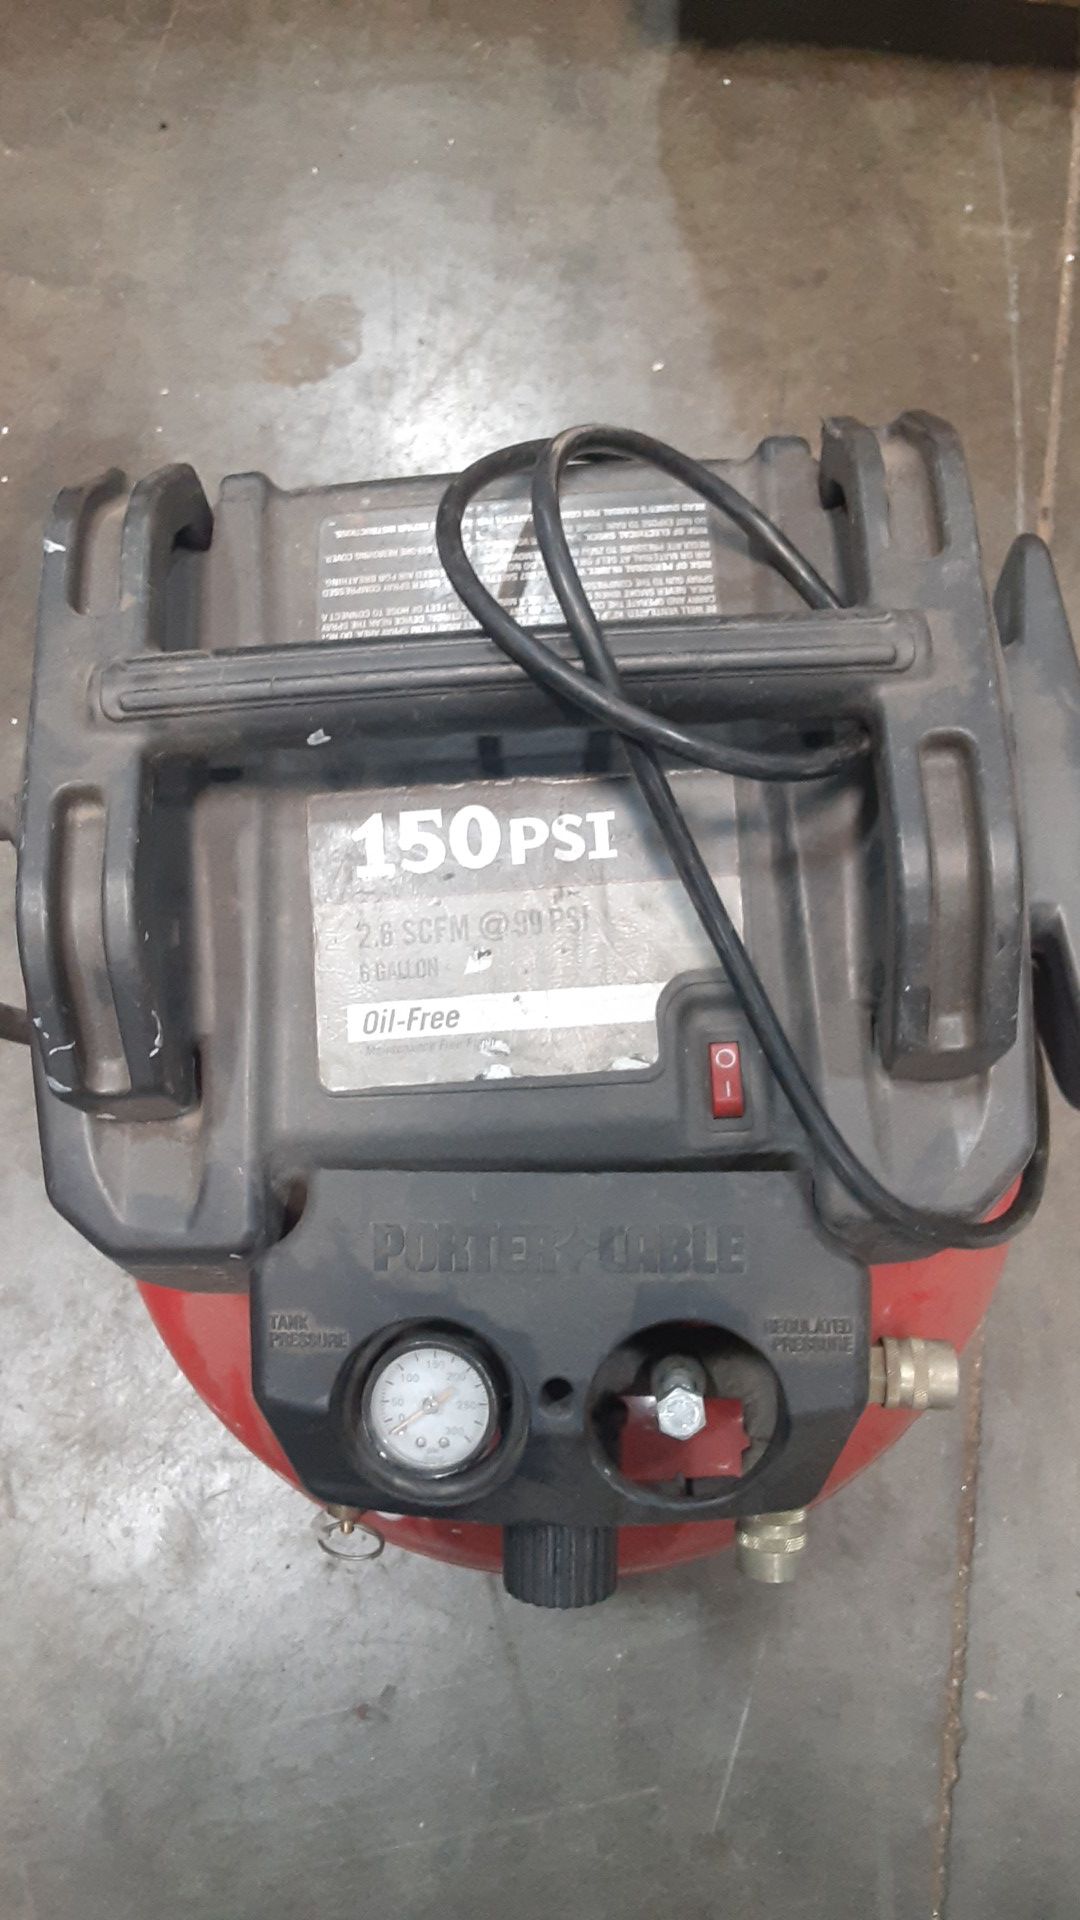 Porter-Cable 150psi, 6gal. compressor.